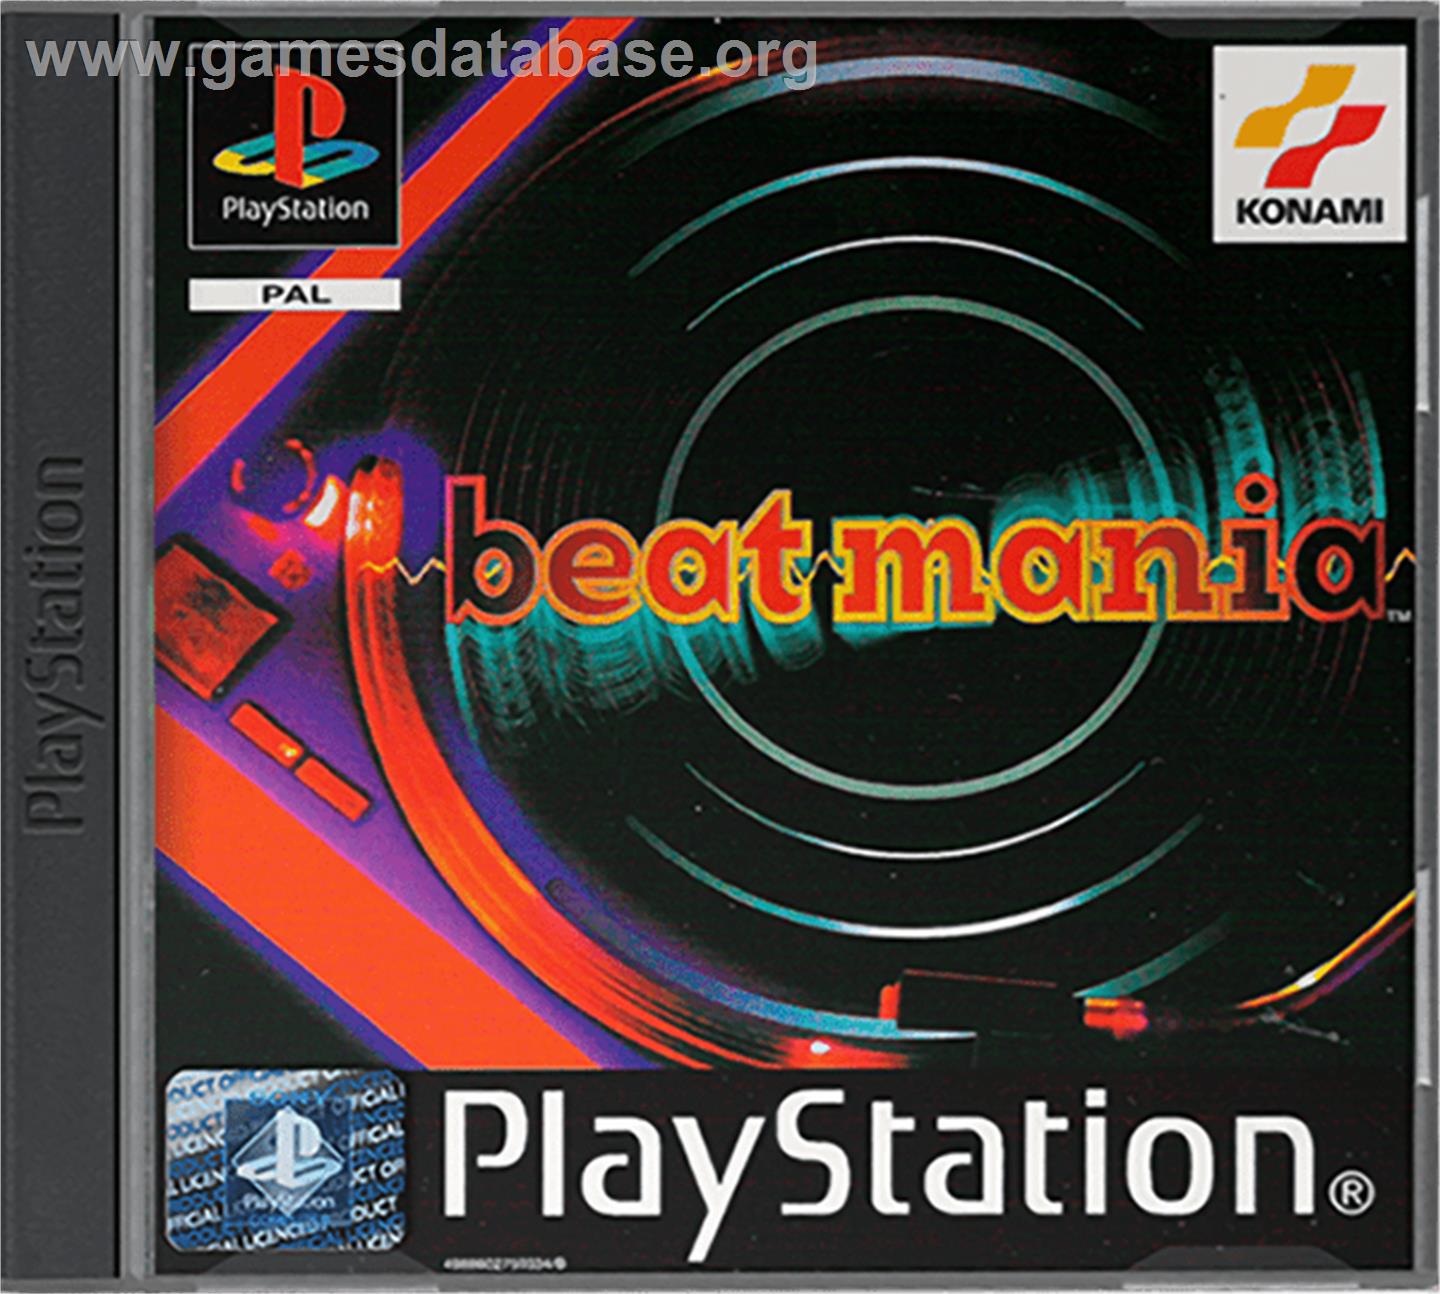 Beatmania - Sony Playstation - Artwork - Box